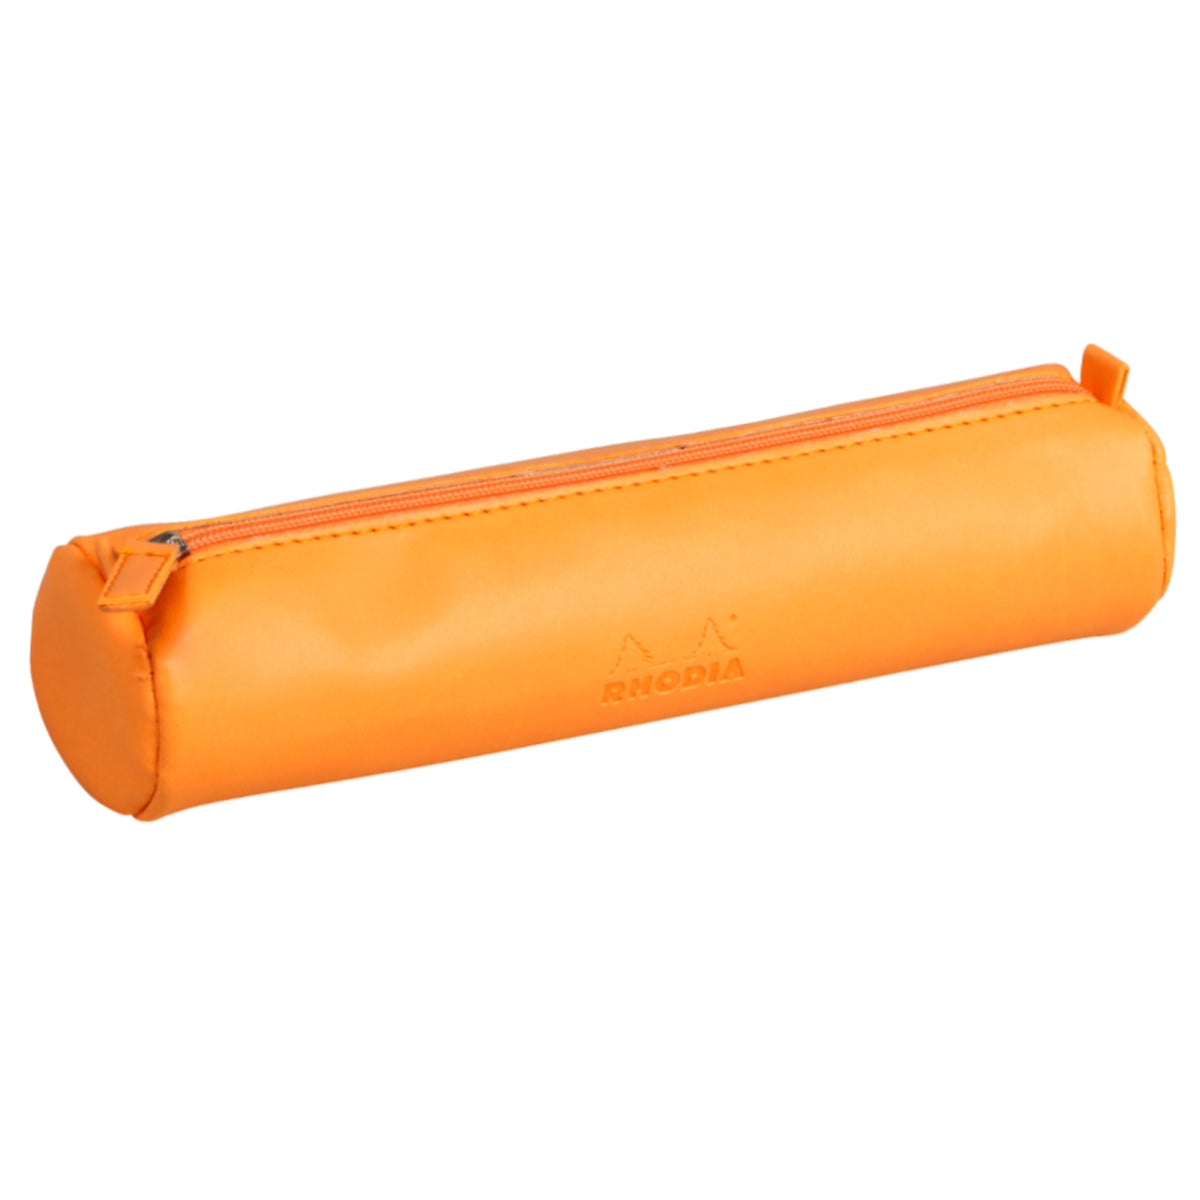 RHODIA rhodiarama Round Pencil Case with Zipper, PU Leather, 215 x 50 mm, Orange